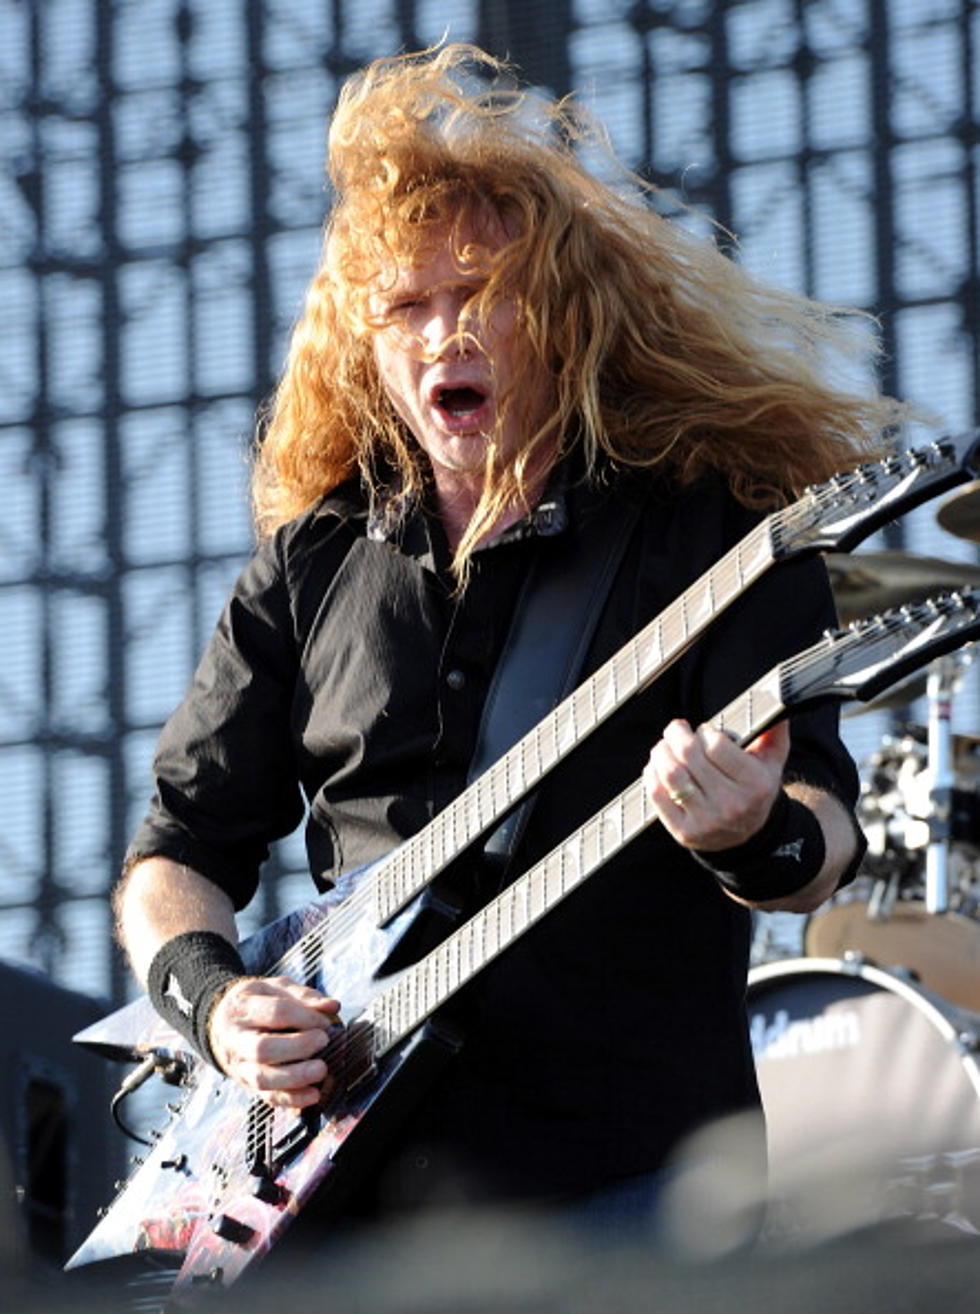 Megadeth Can’t Afford Big 4 Tour